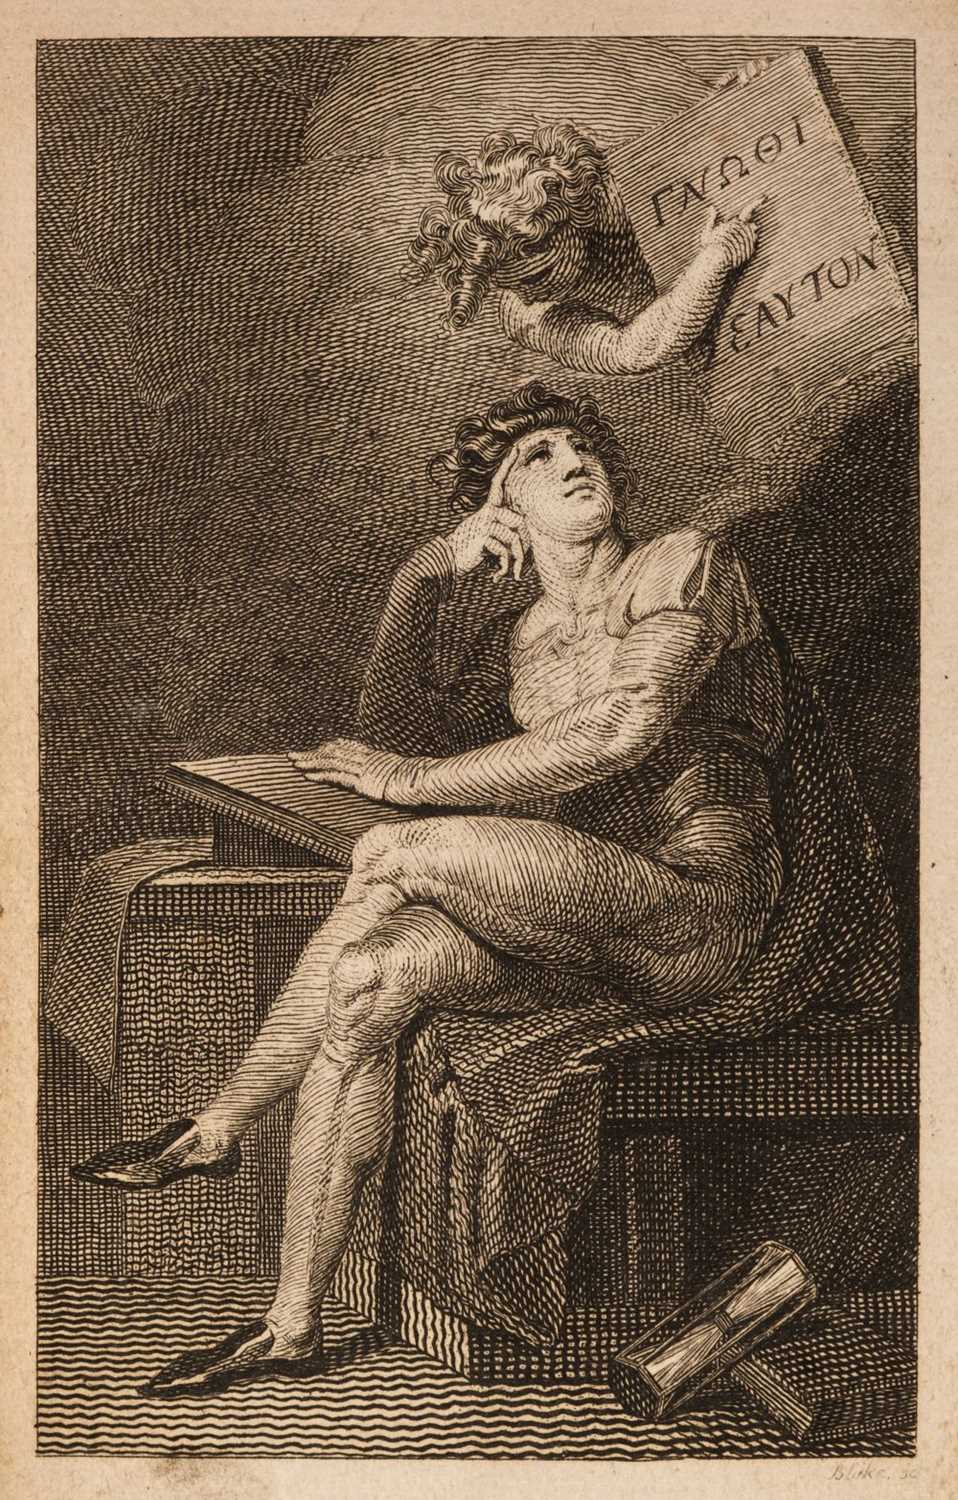 Lot 234 - Blake (William, illustrator). Aphorisms on Man, 1789..., and others